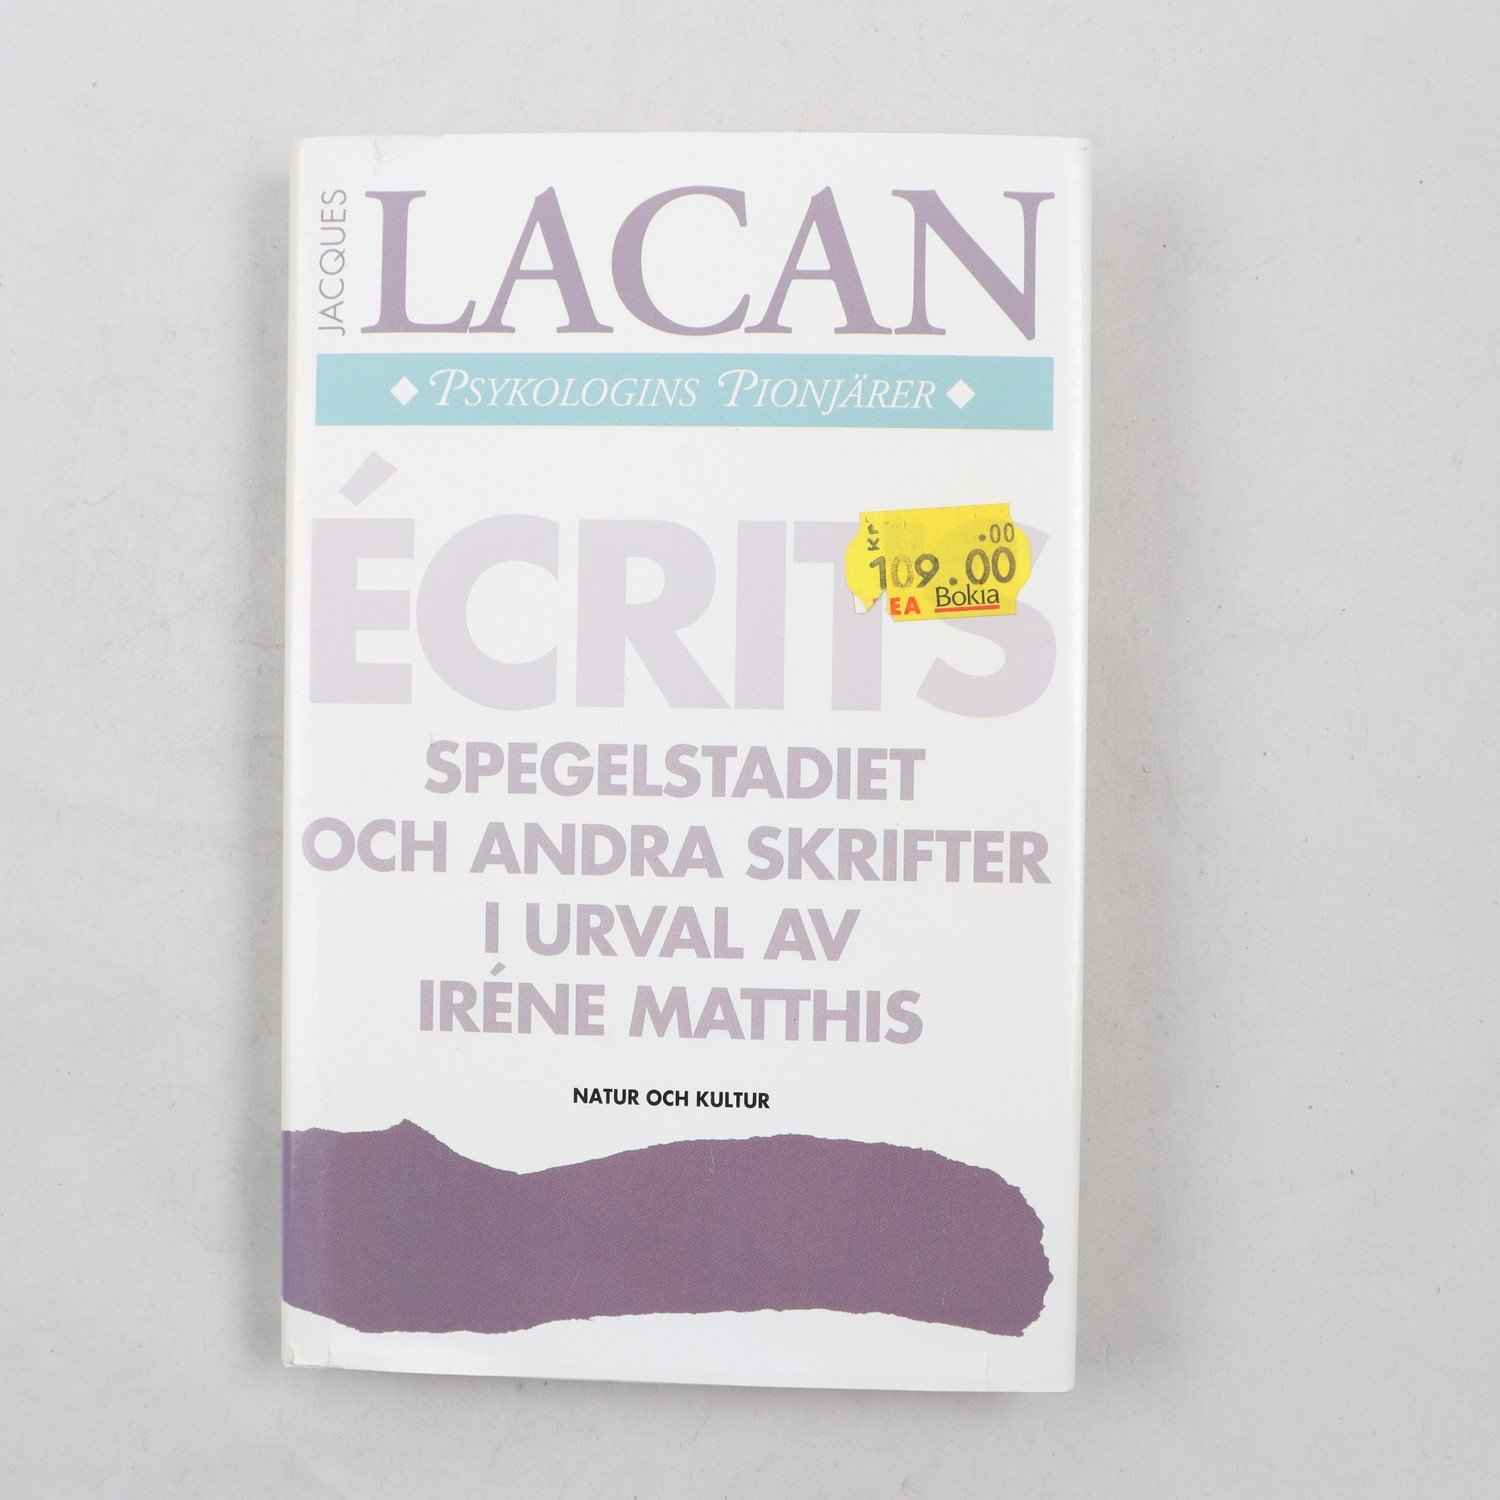 Jacques Lacan, Écrits: Spegelstadiet och andra skrifter